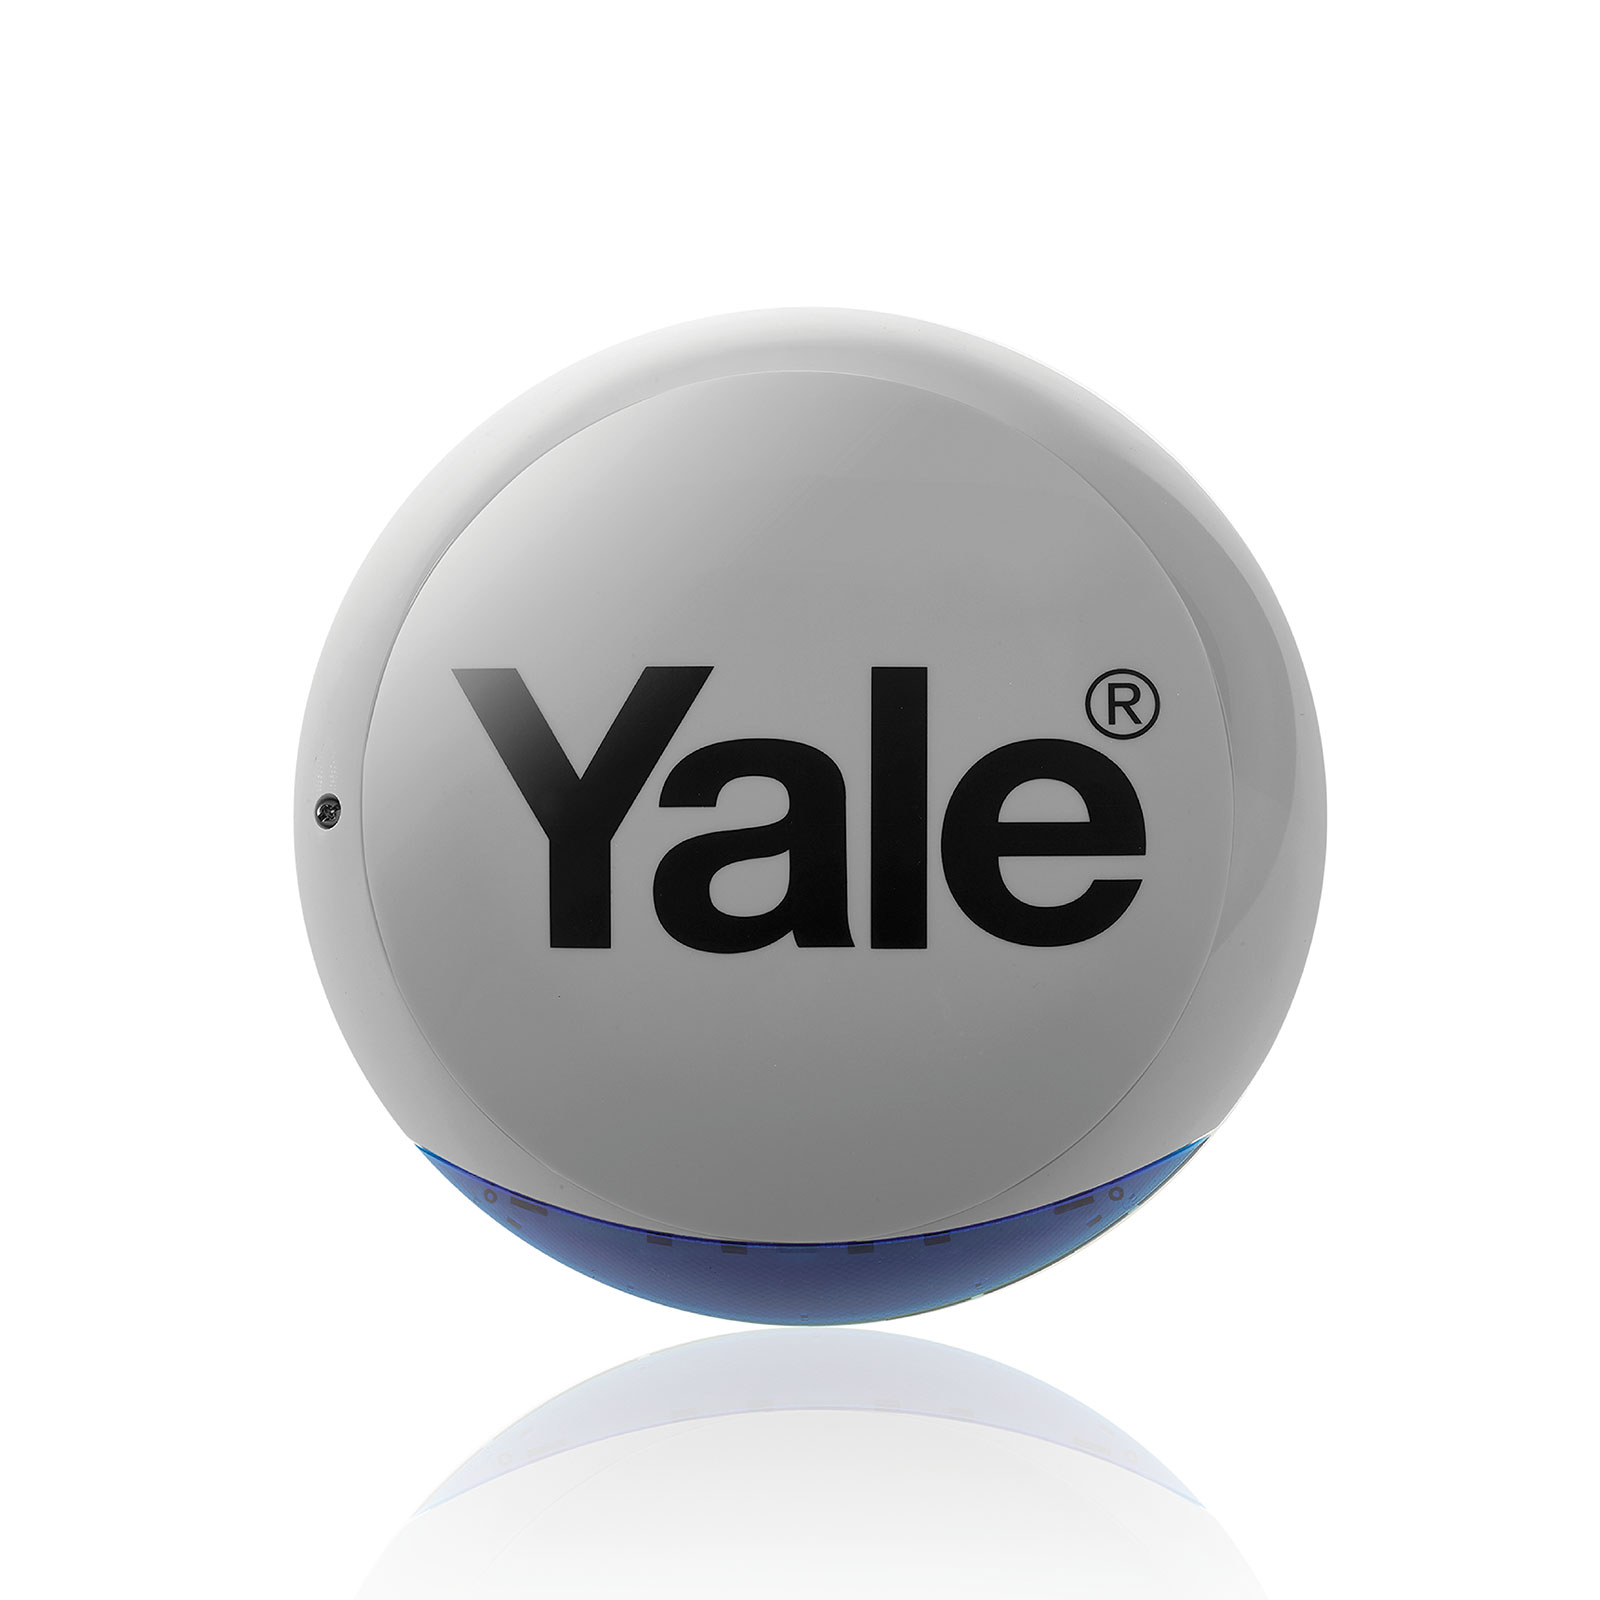 Yale Sync outdoor siren in grey